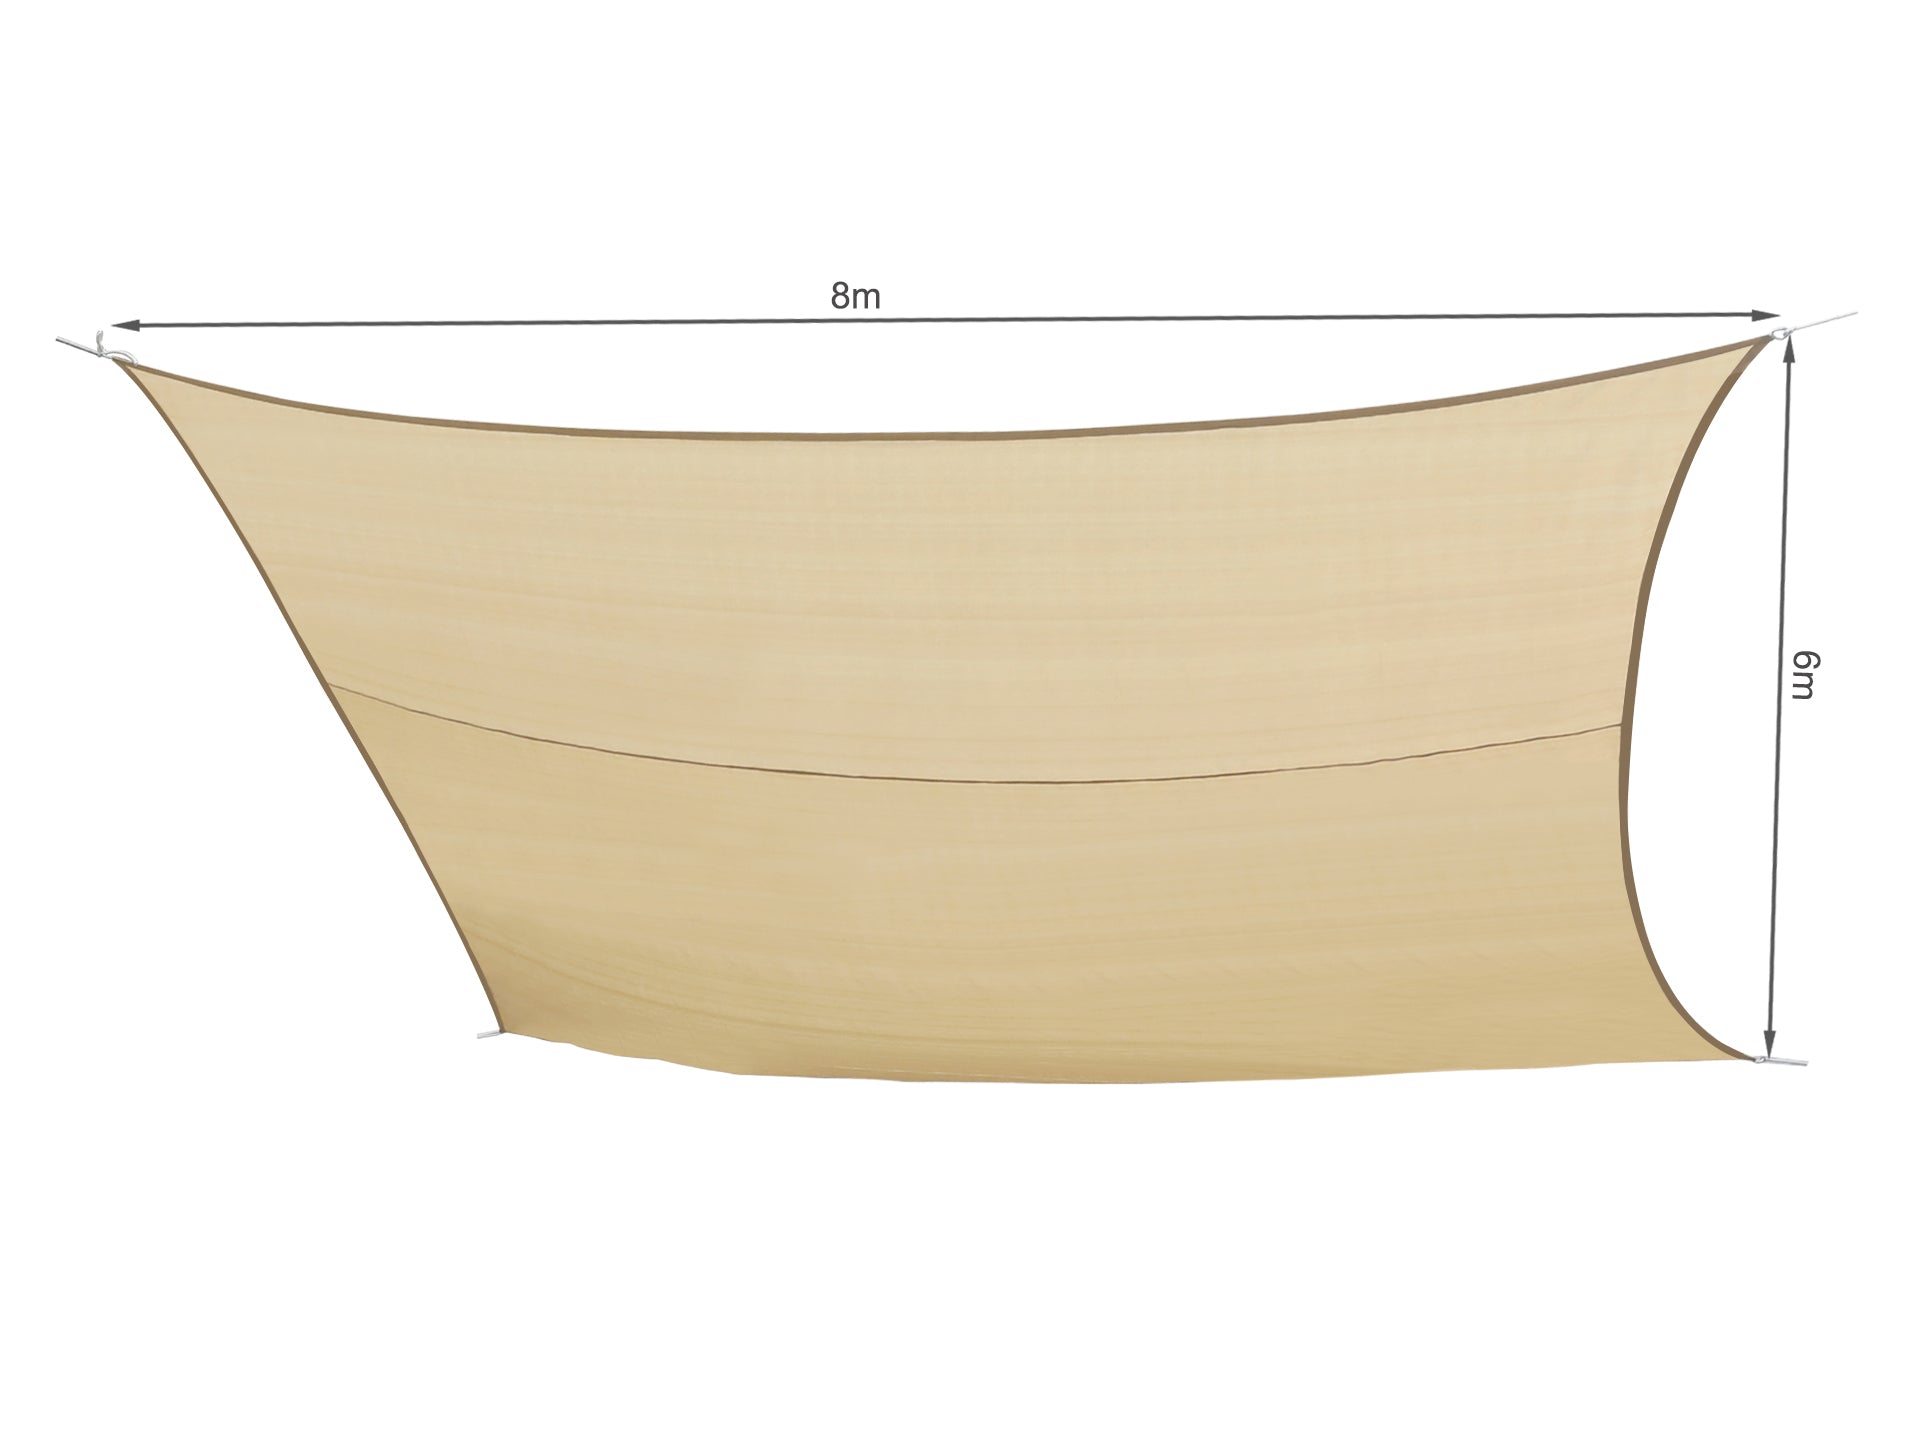 TOUGHOUT Kool Rectangle Shade Sail 6m x 8m - SAND